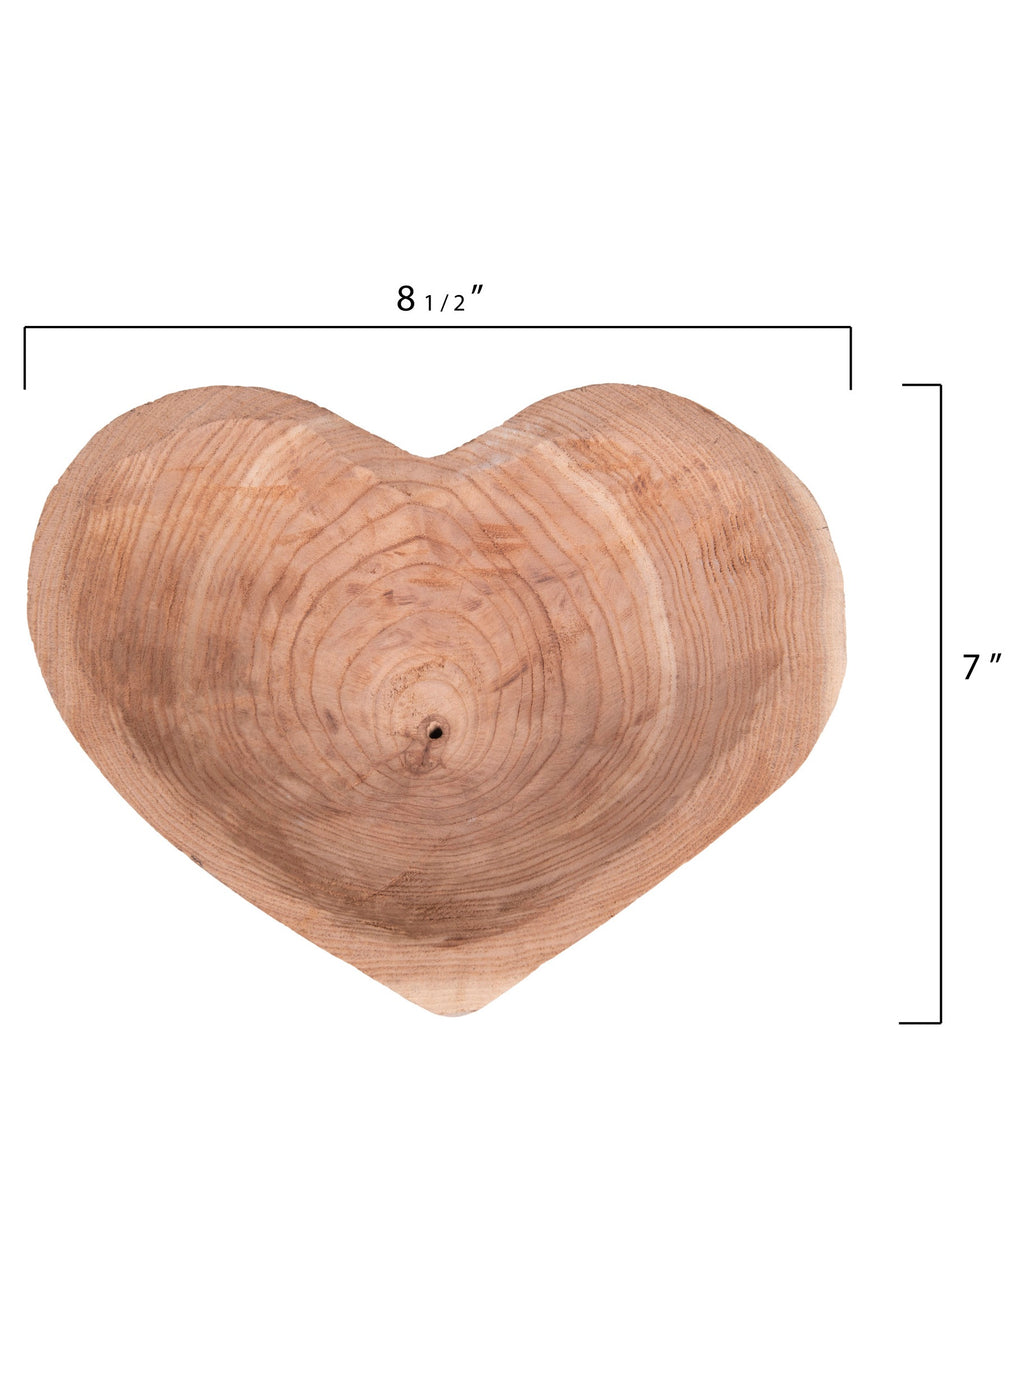 Queen Decorative Wood Heart Bowl